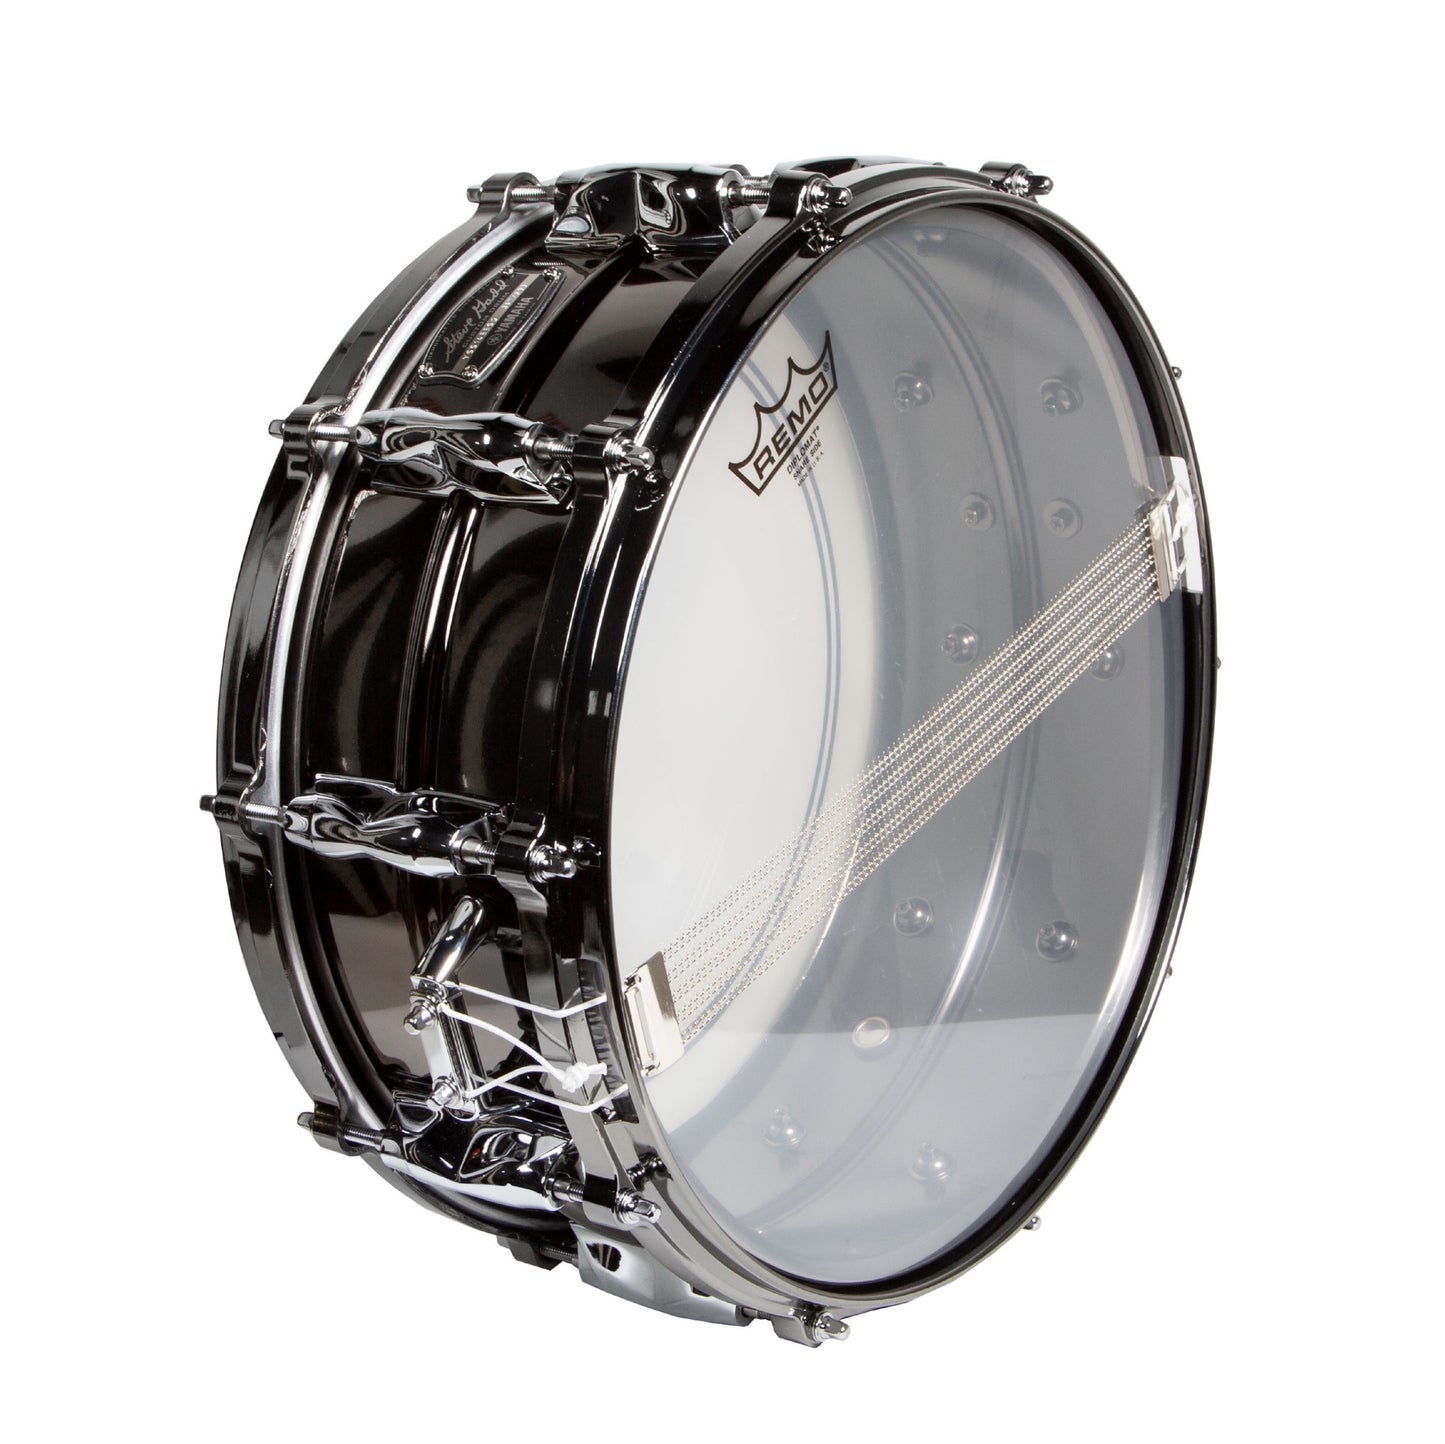 Yamaha Steve Gadd Signature Snare Drum - 5.5" x 14" Black Nickel